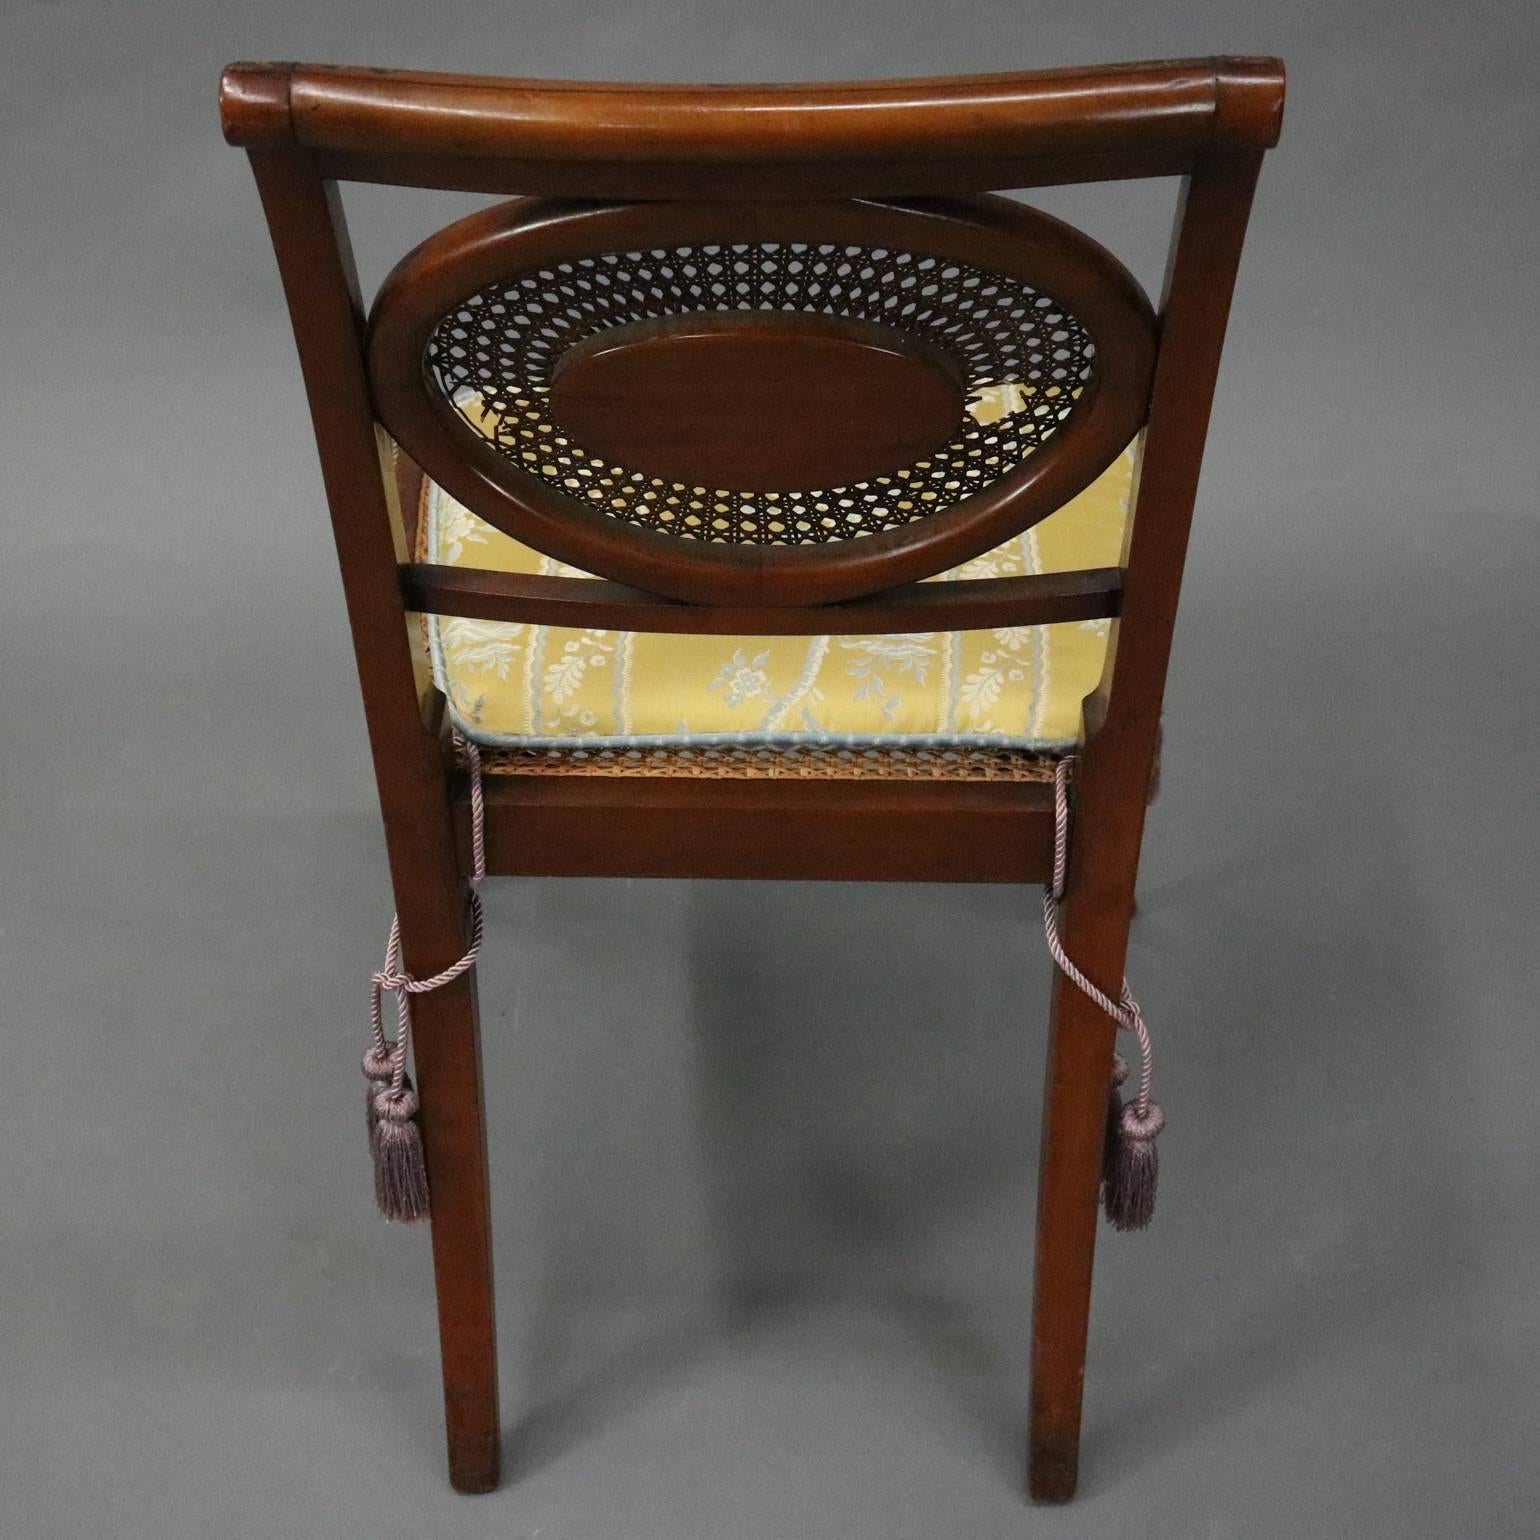 Antique English Regency Hand-Painted and Caned Mahogany Side Chair, circa 1890 (Handbemalt)